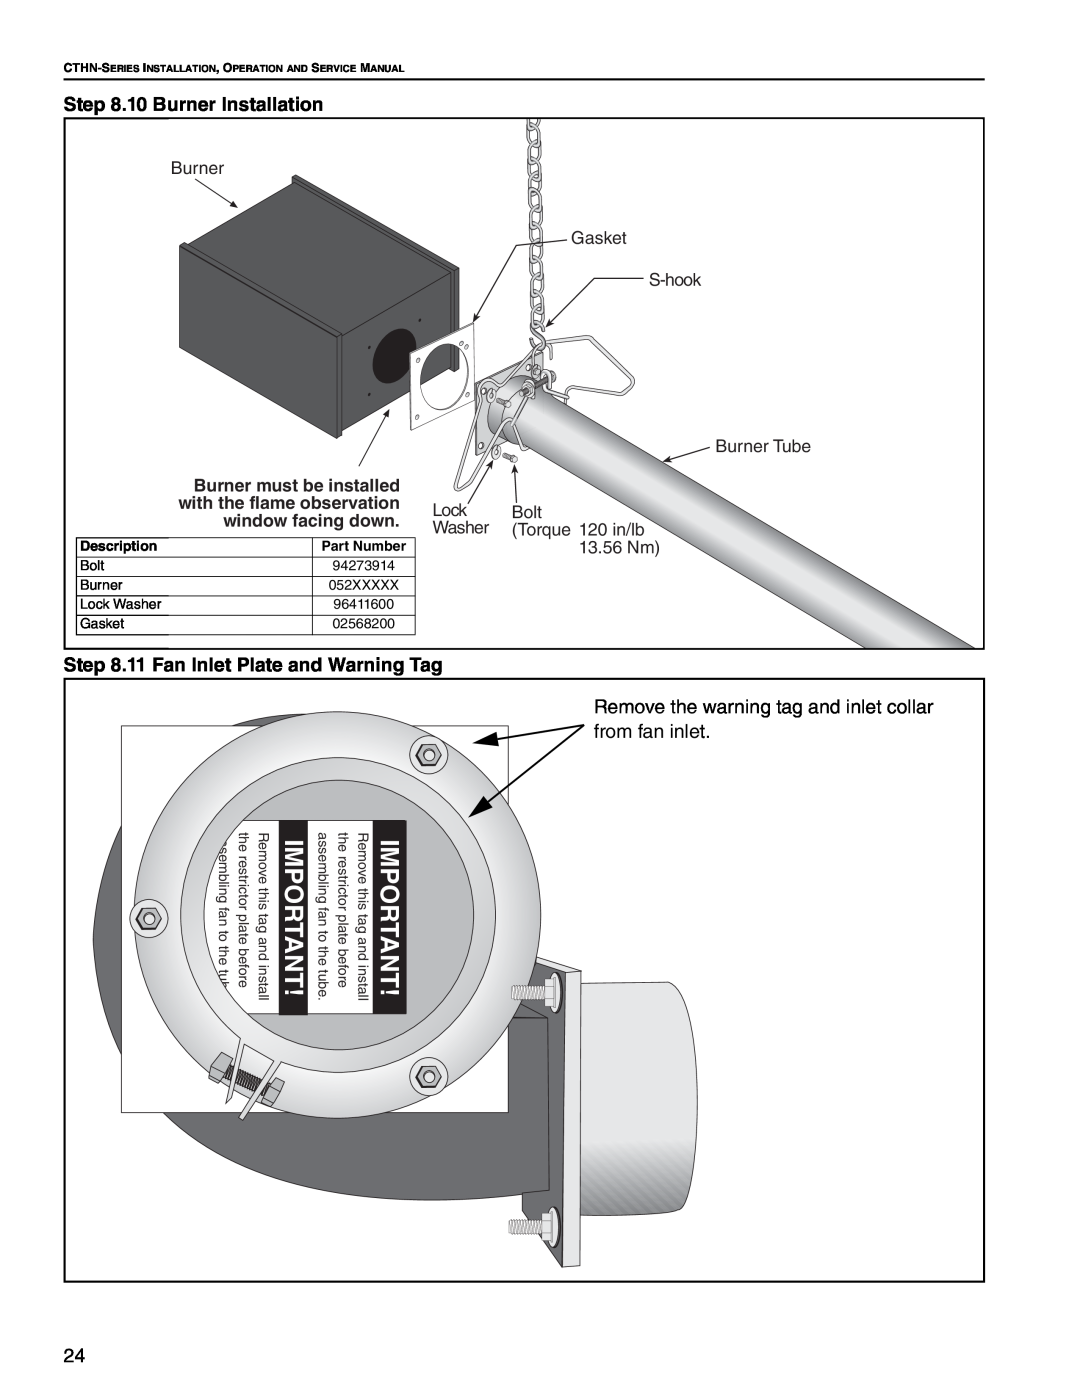 Roberts Gorden CTHN-150, CTHN-200 10 Burner Installation, 11 Fan Inlet Plate and Warning Tag, Description, Part Number 